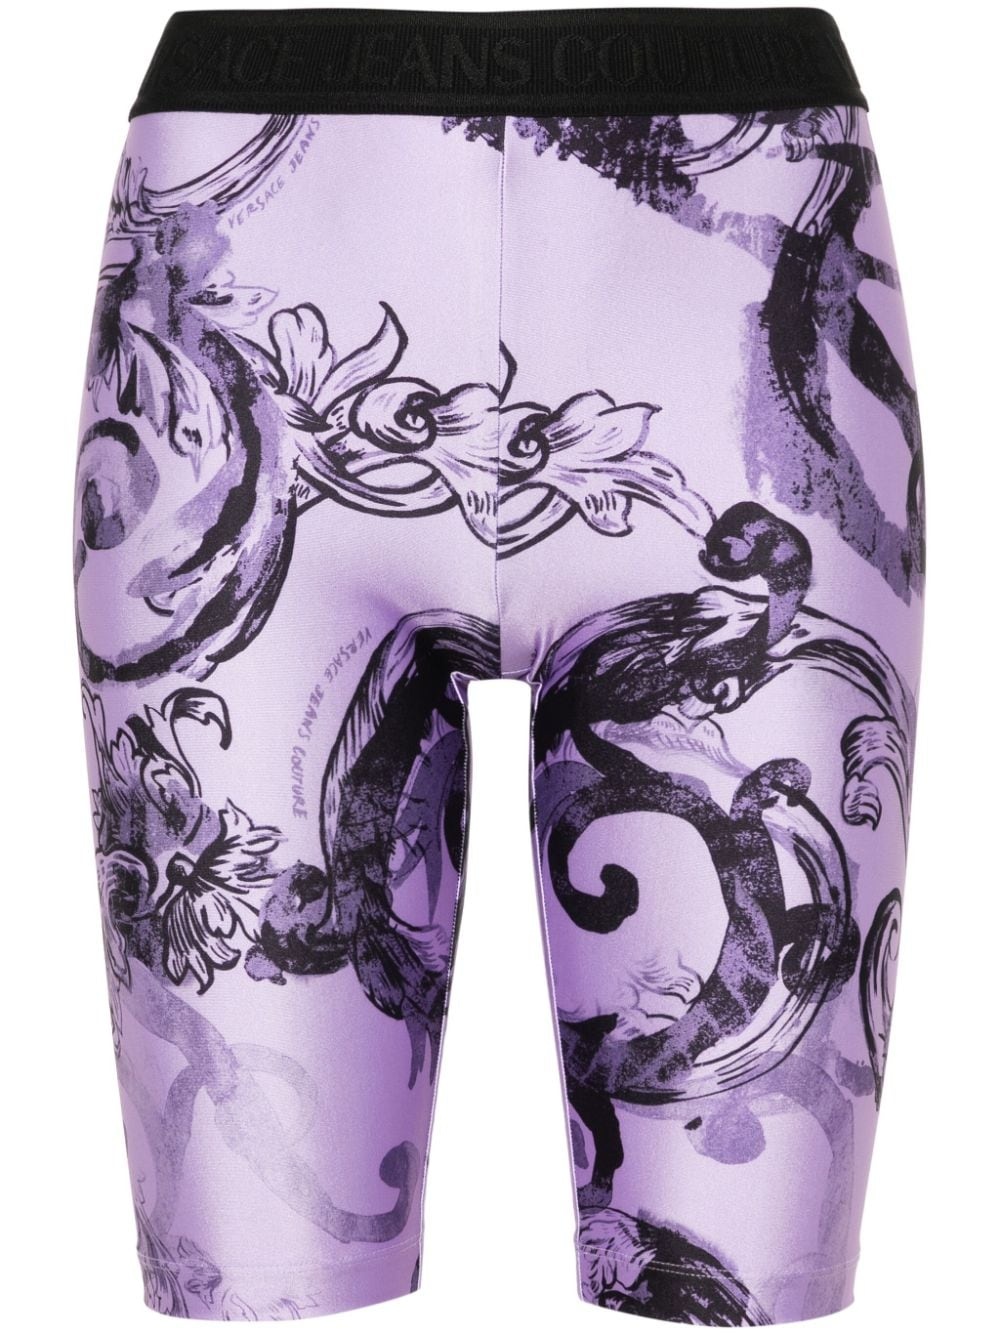 Baroccoflage-print cycling shorts - 1